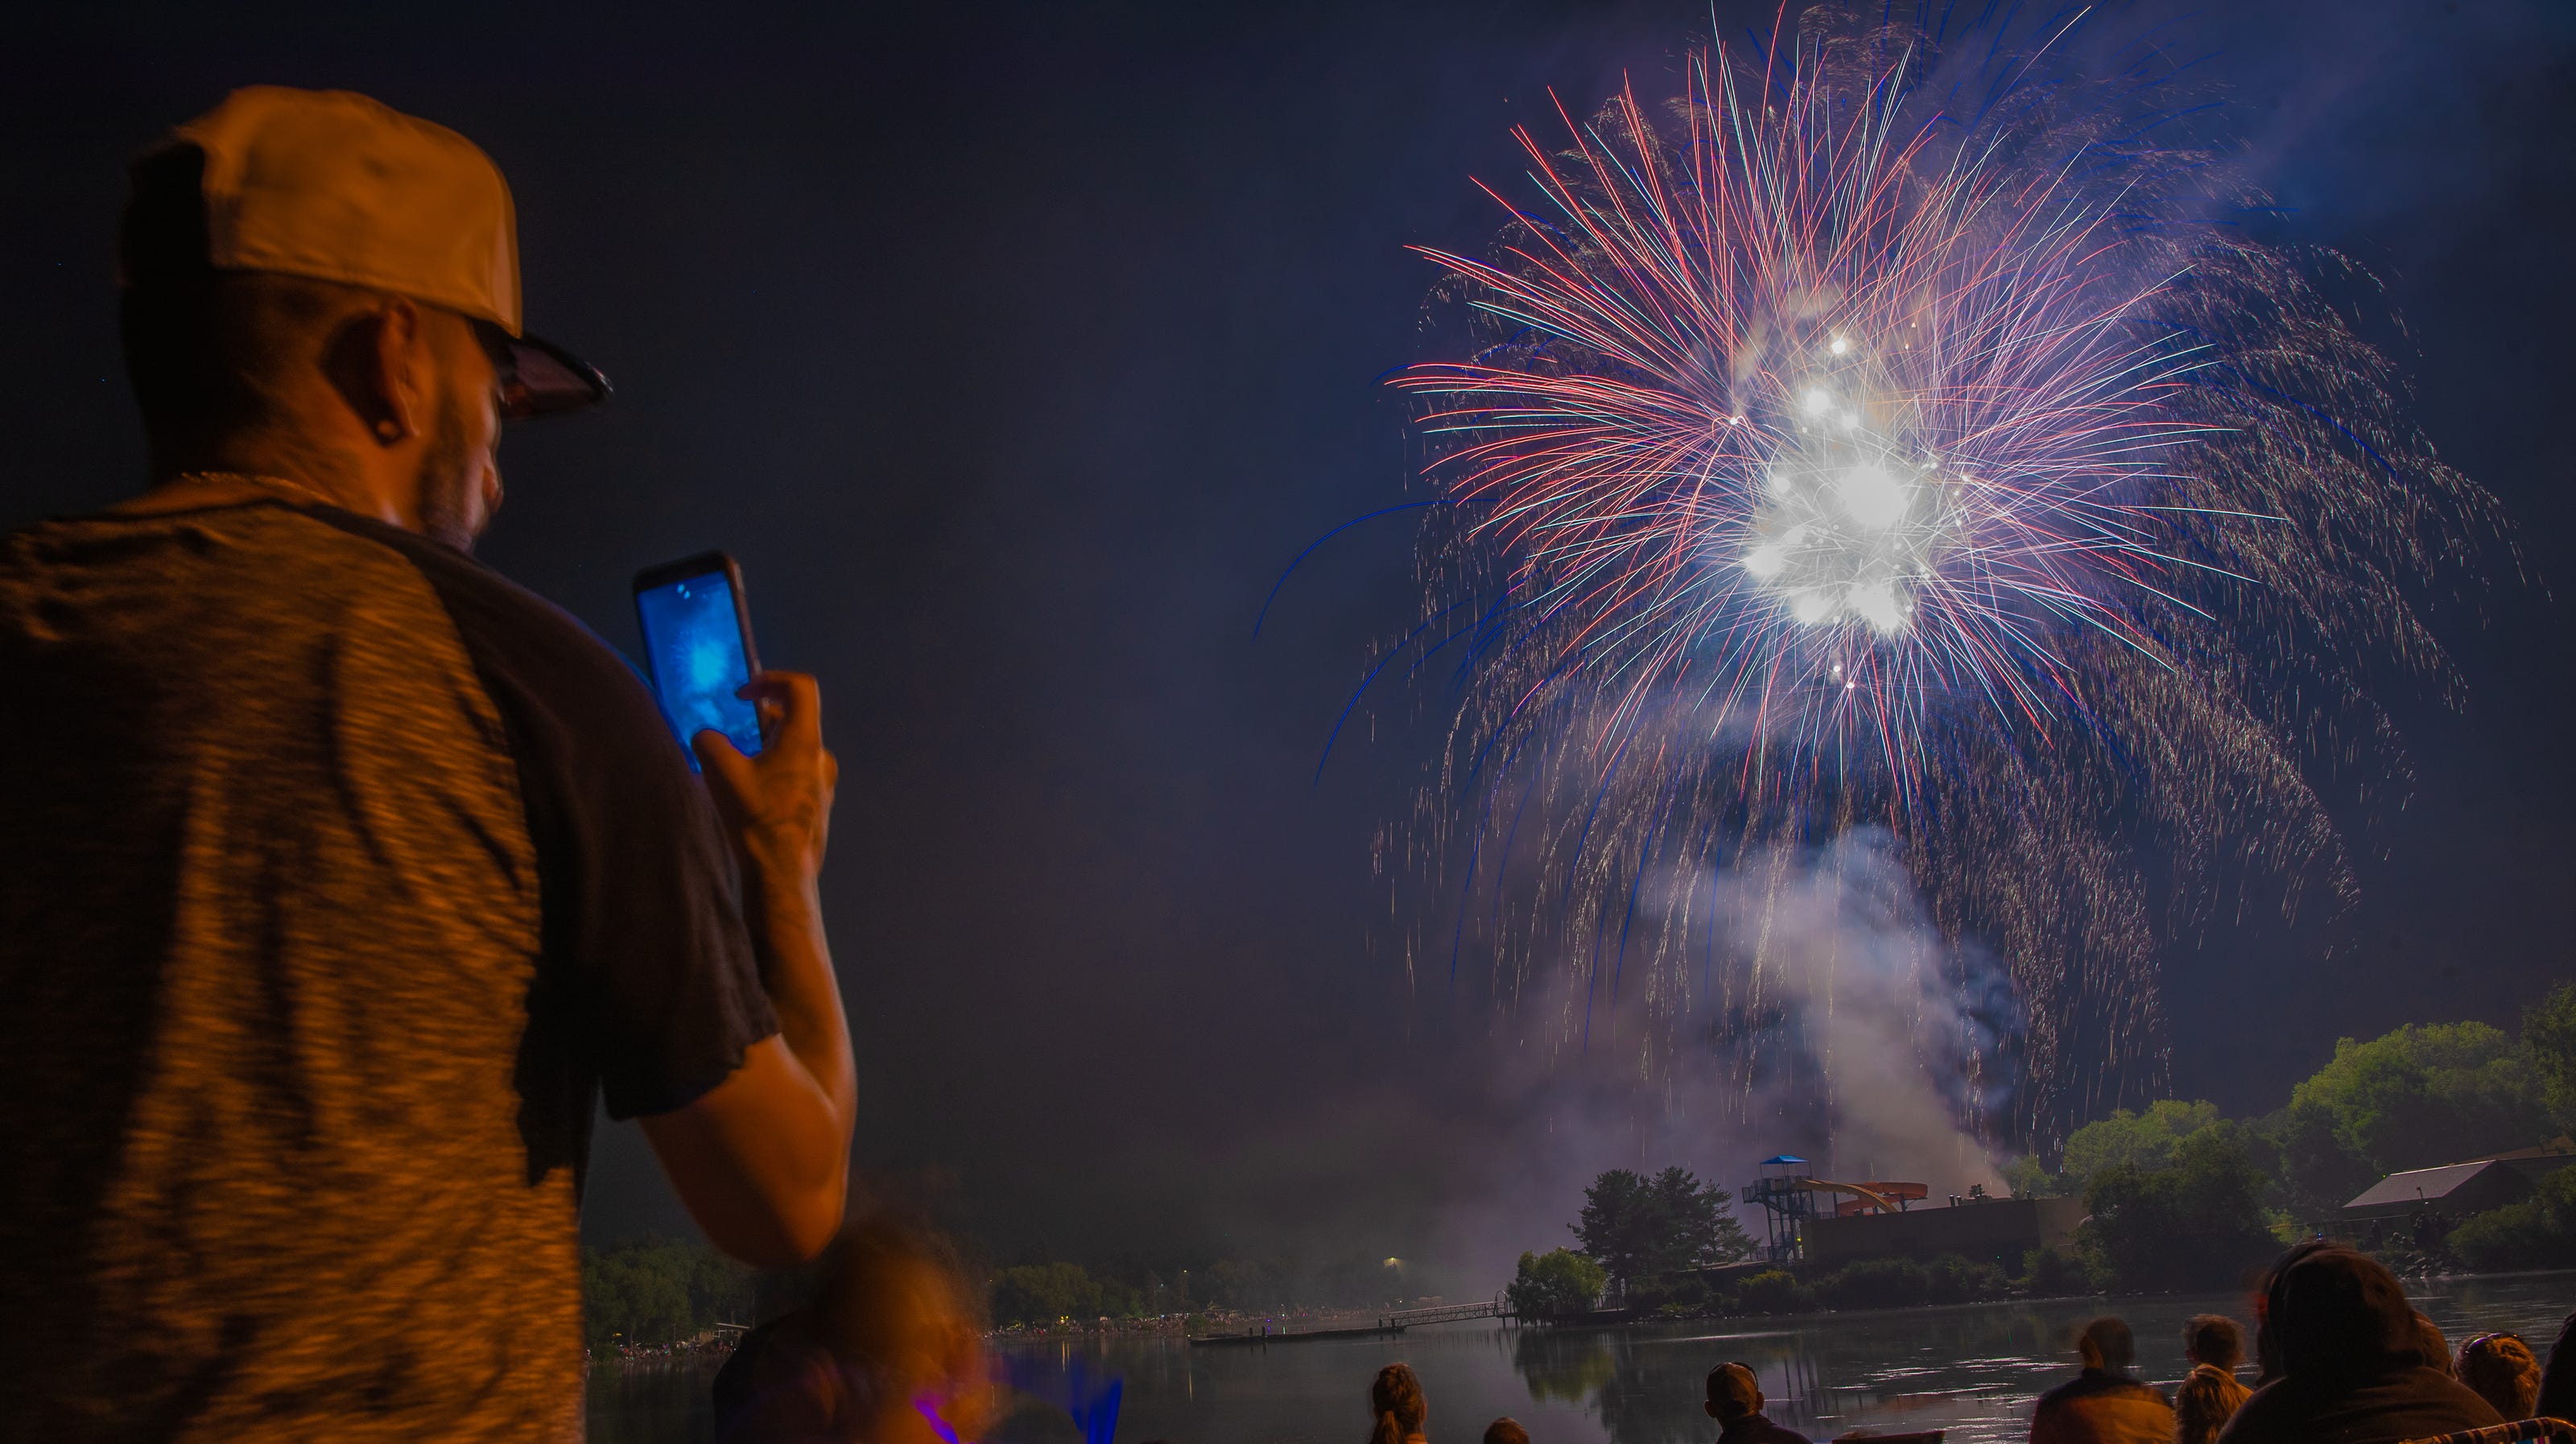 Fort Collins Fourth of July events Parade, City Park fireworks return